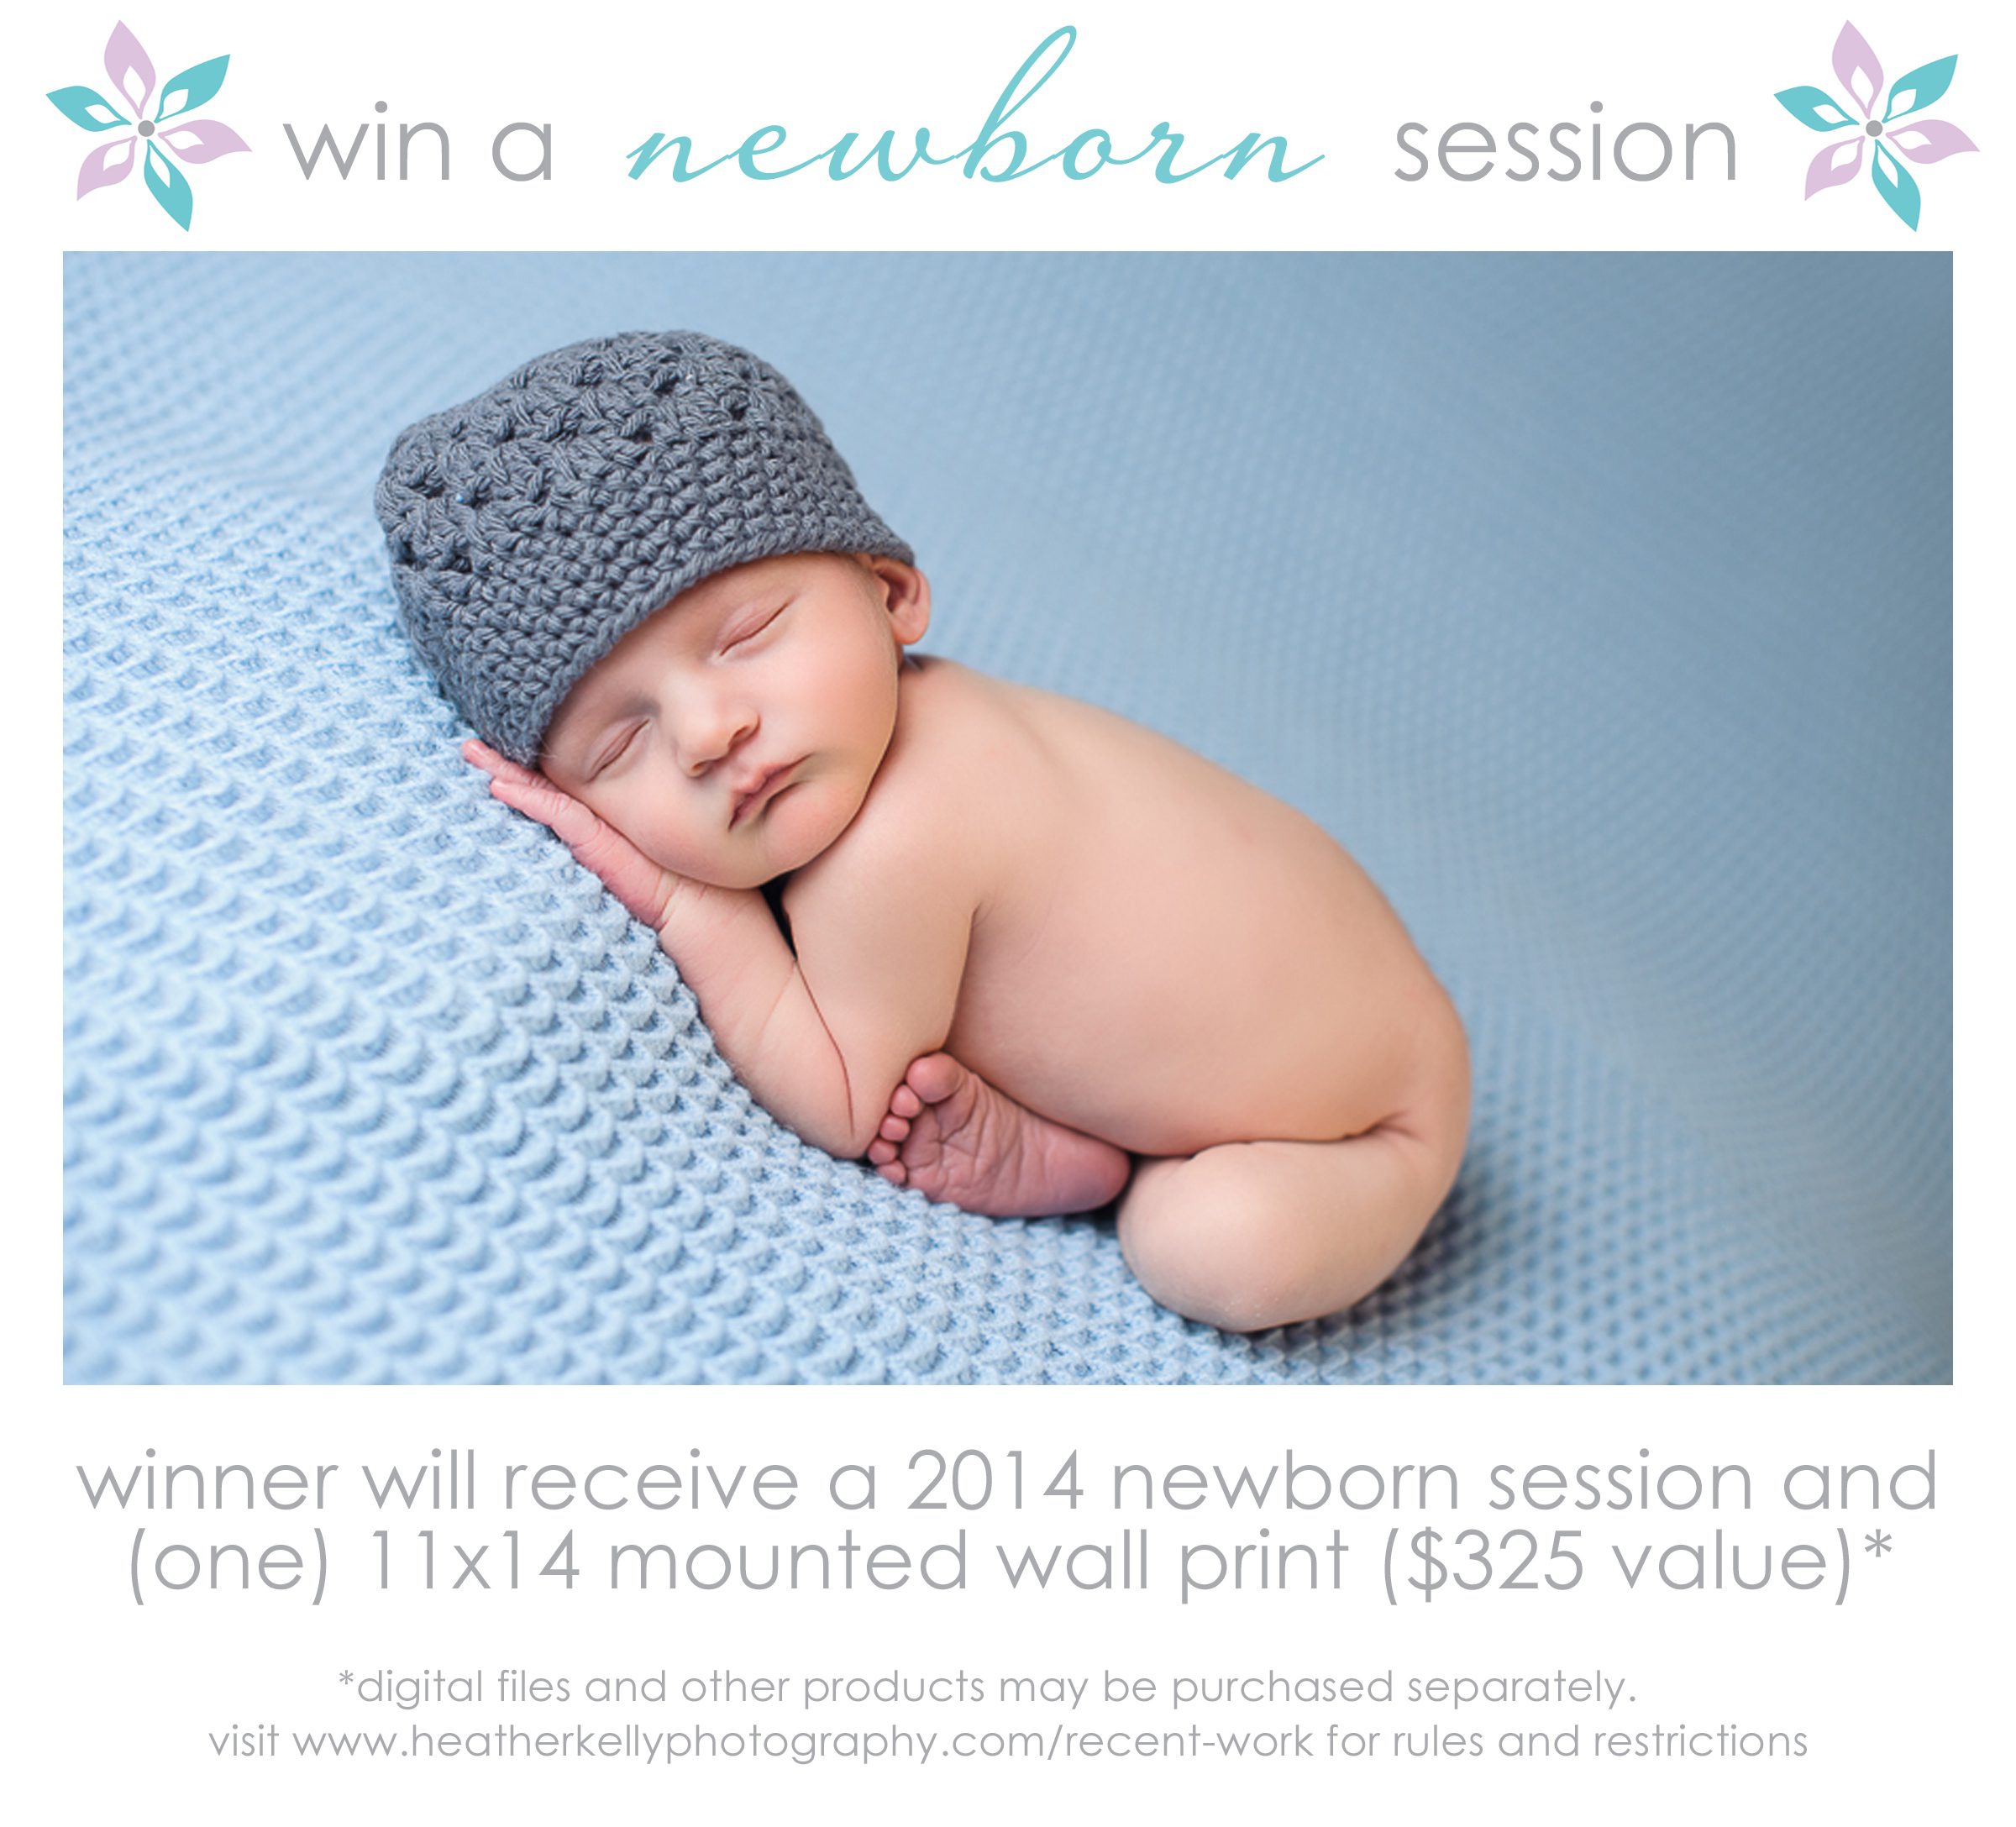 win a newborn session in ct - ct newborn session giveaway